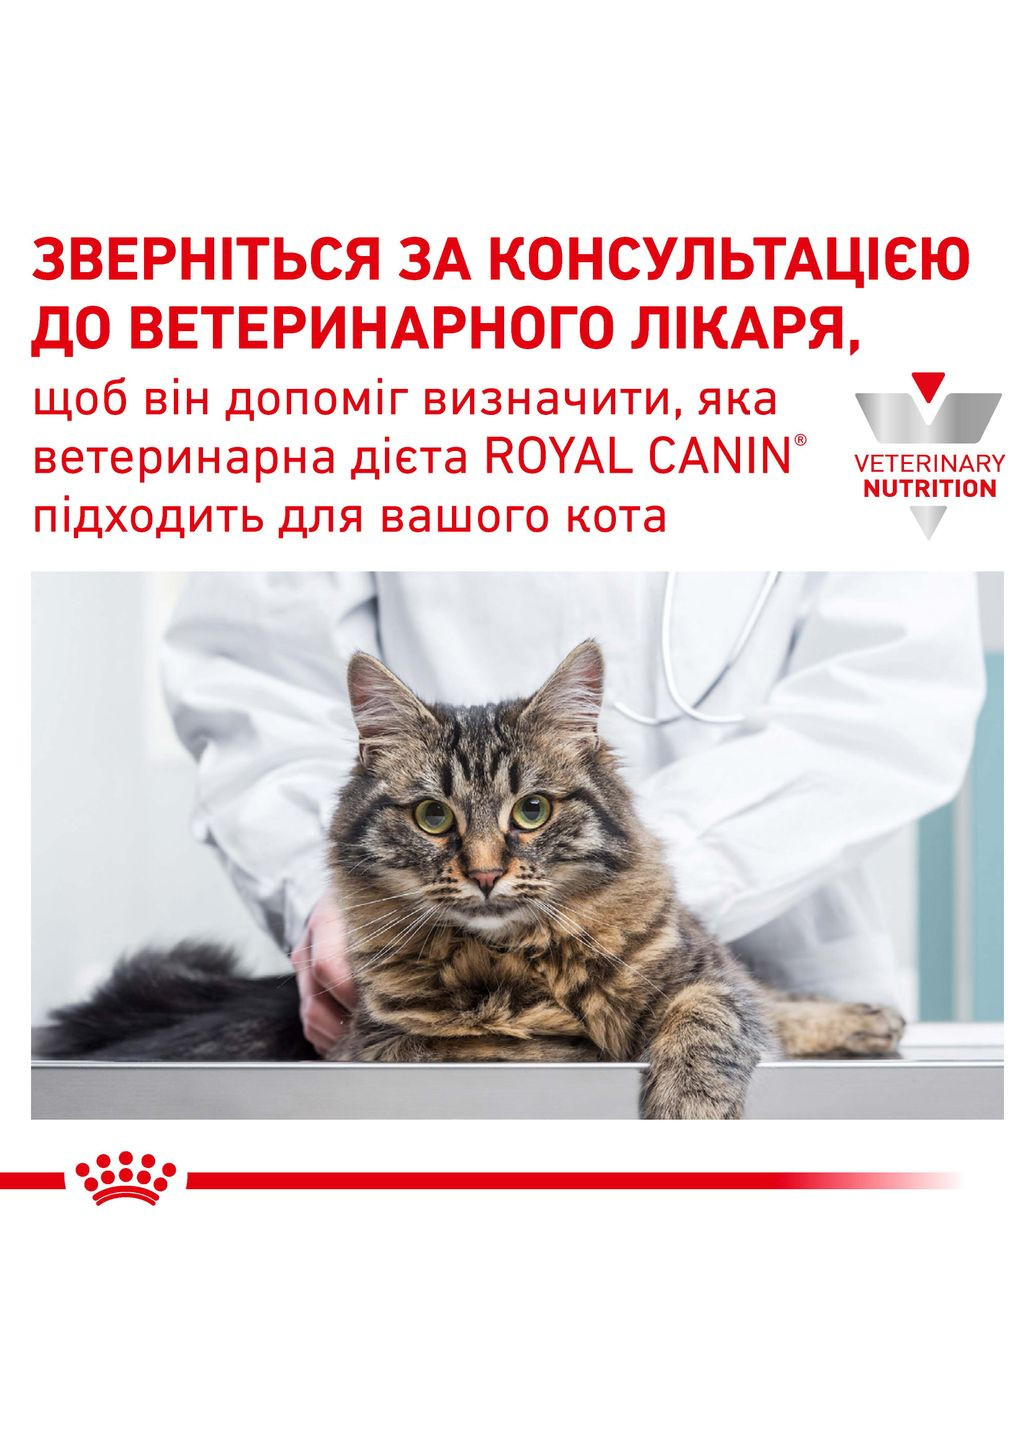 Сухой корм для взрослых кошек Urinary S/O Cat 3.5 кг (3182550711050) (39010351) Royal Canin (279565301)